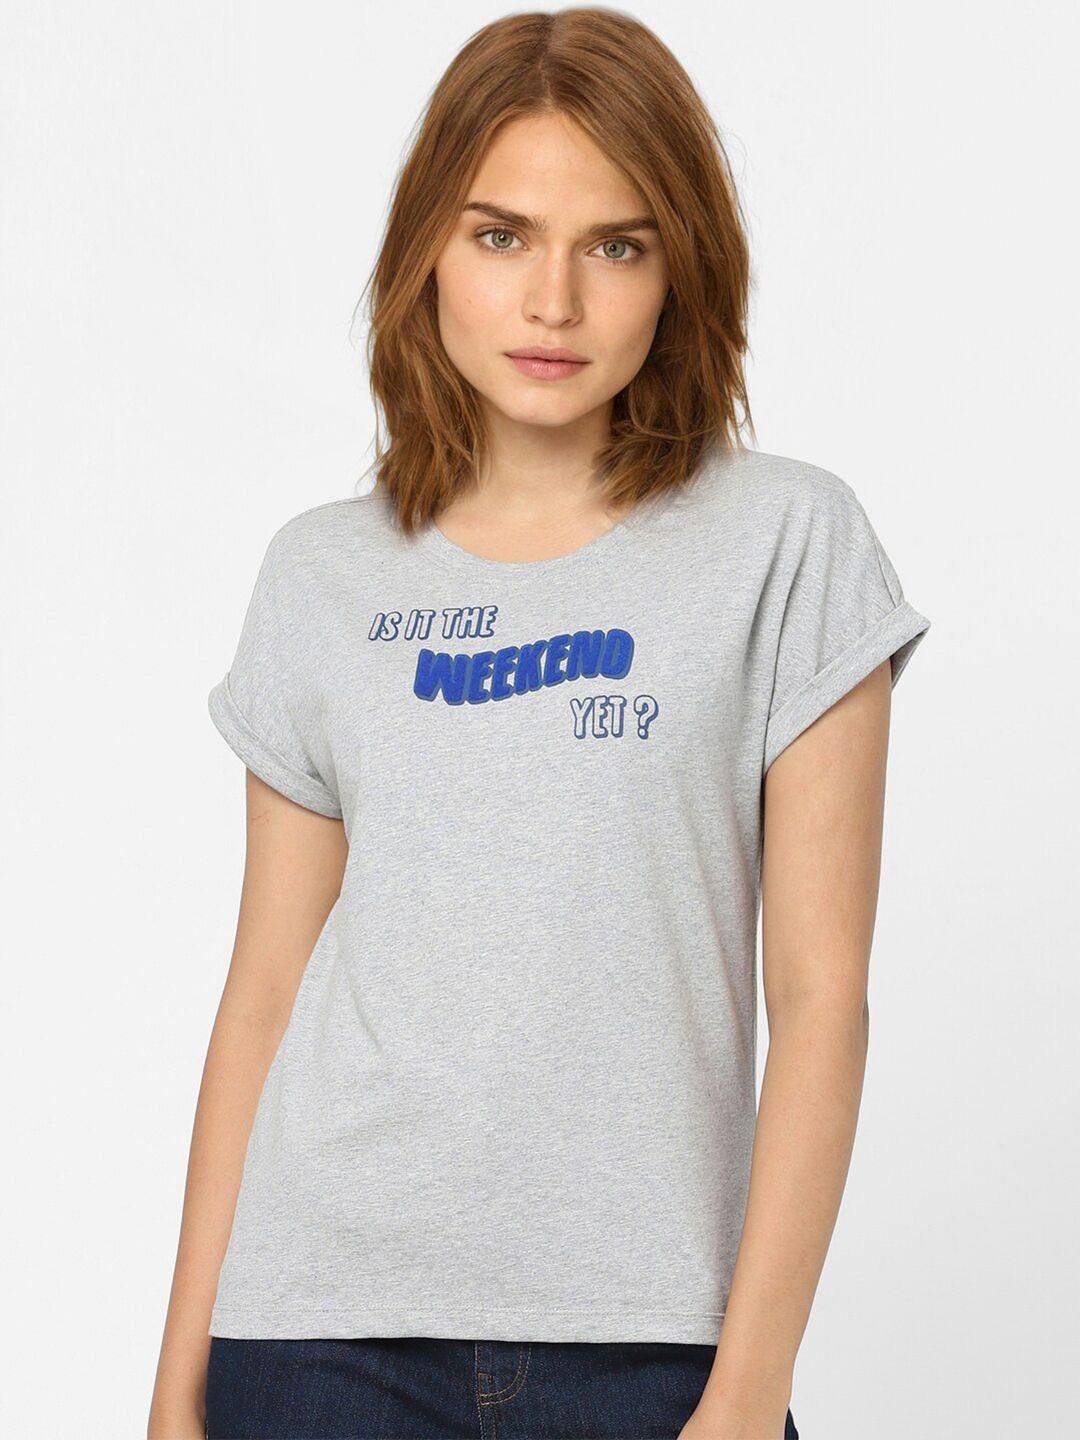 vero-moda-women-grey-typography-printed-extended-sleeves-t-shirt